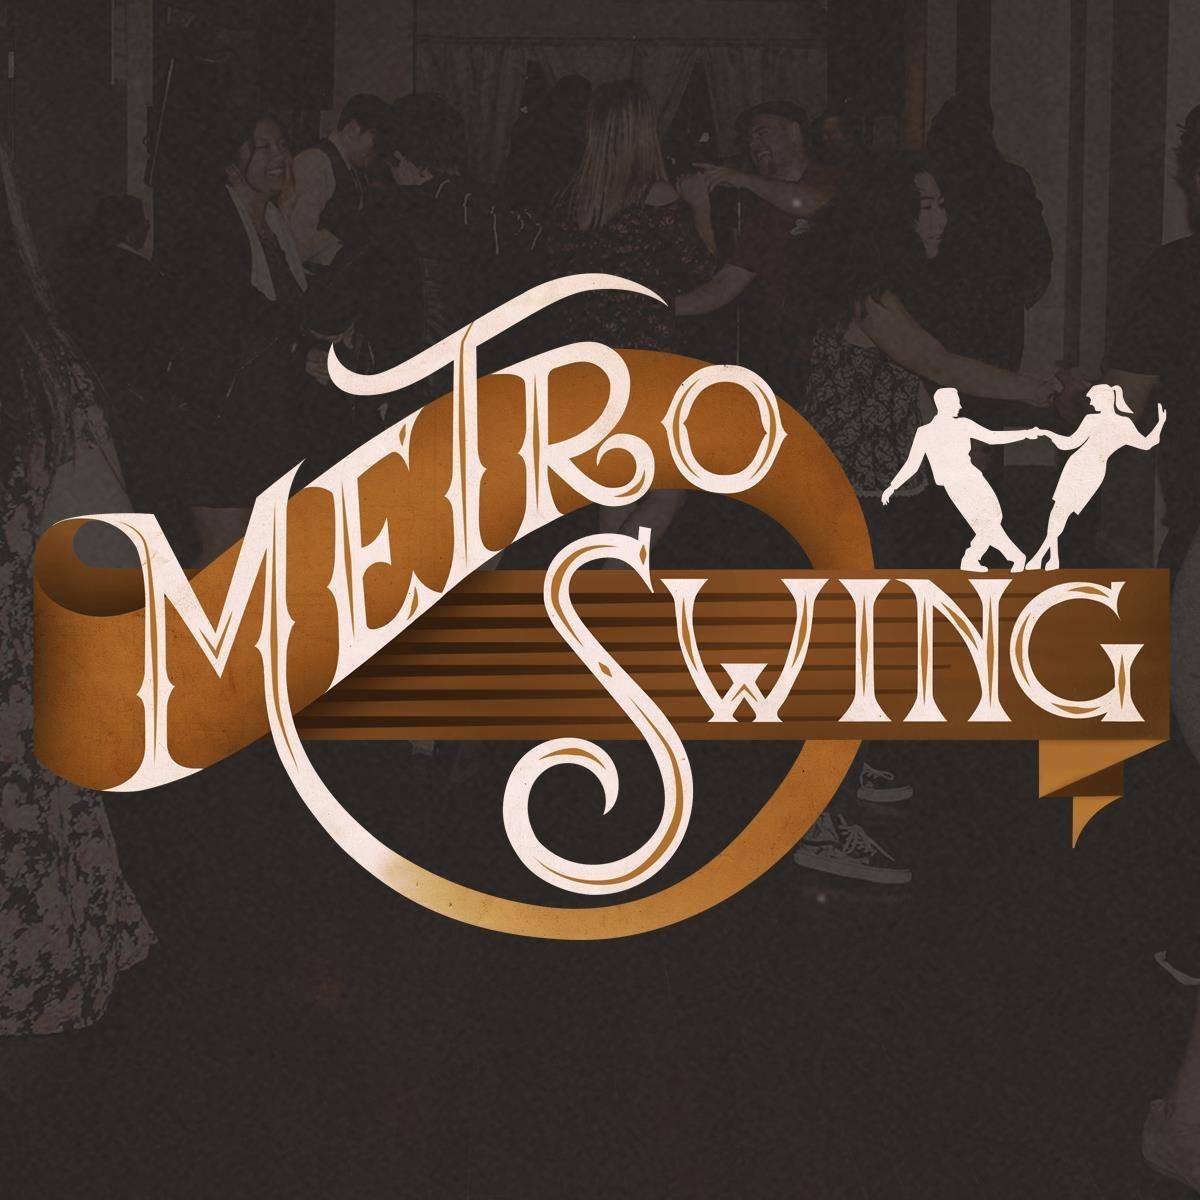 Metro Swing